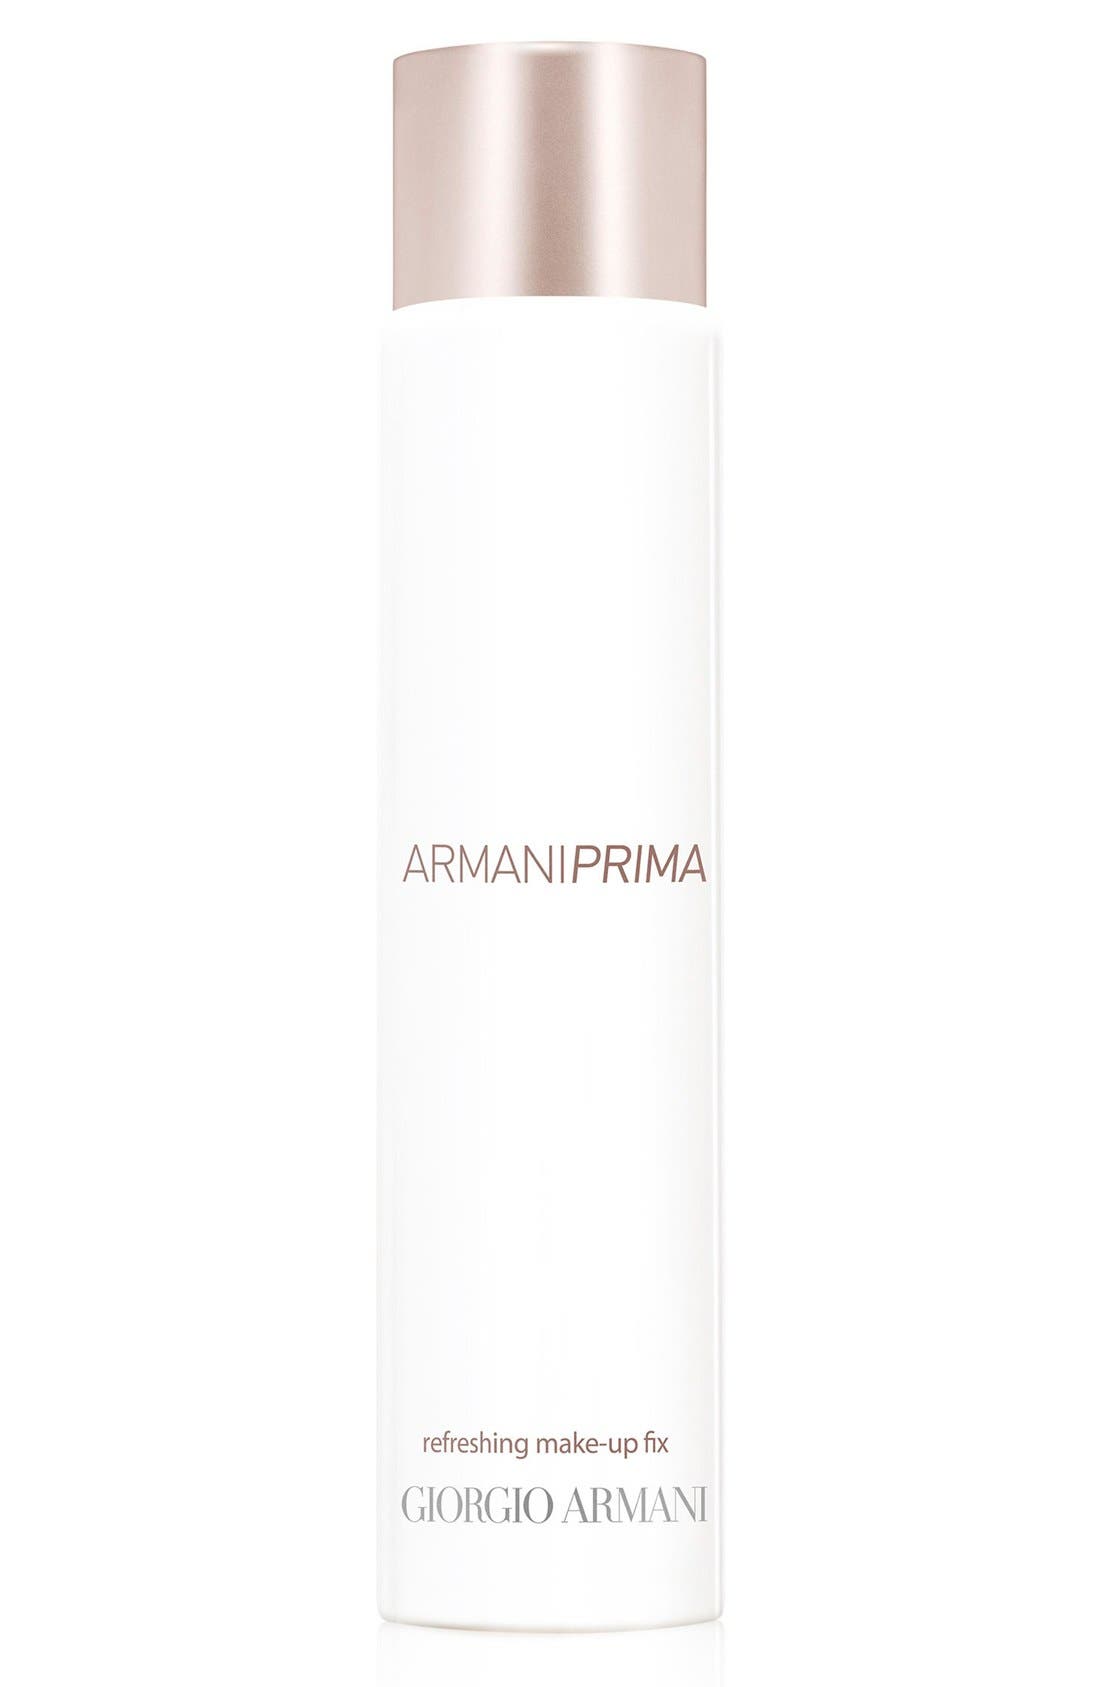 Giorgio Armani Prima Refreshing Makeup 